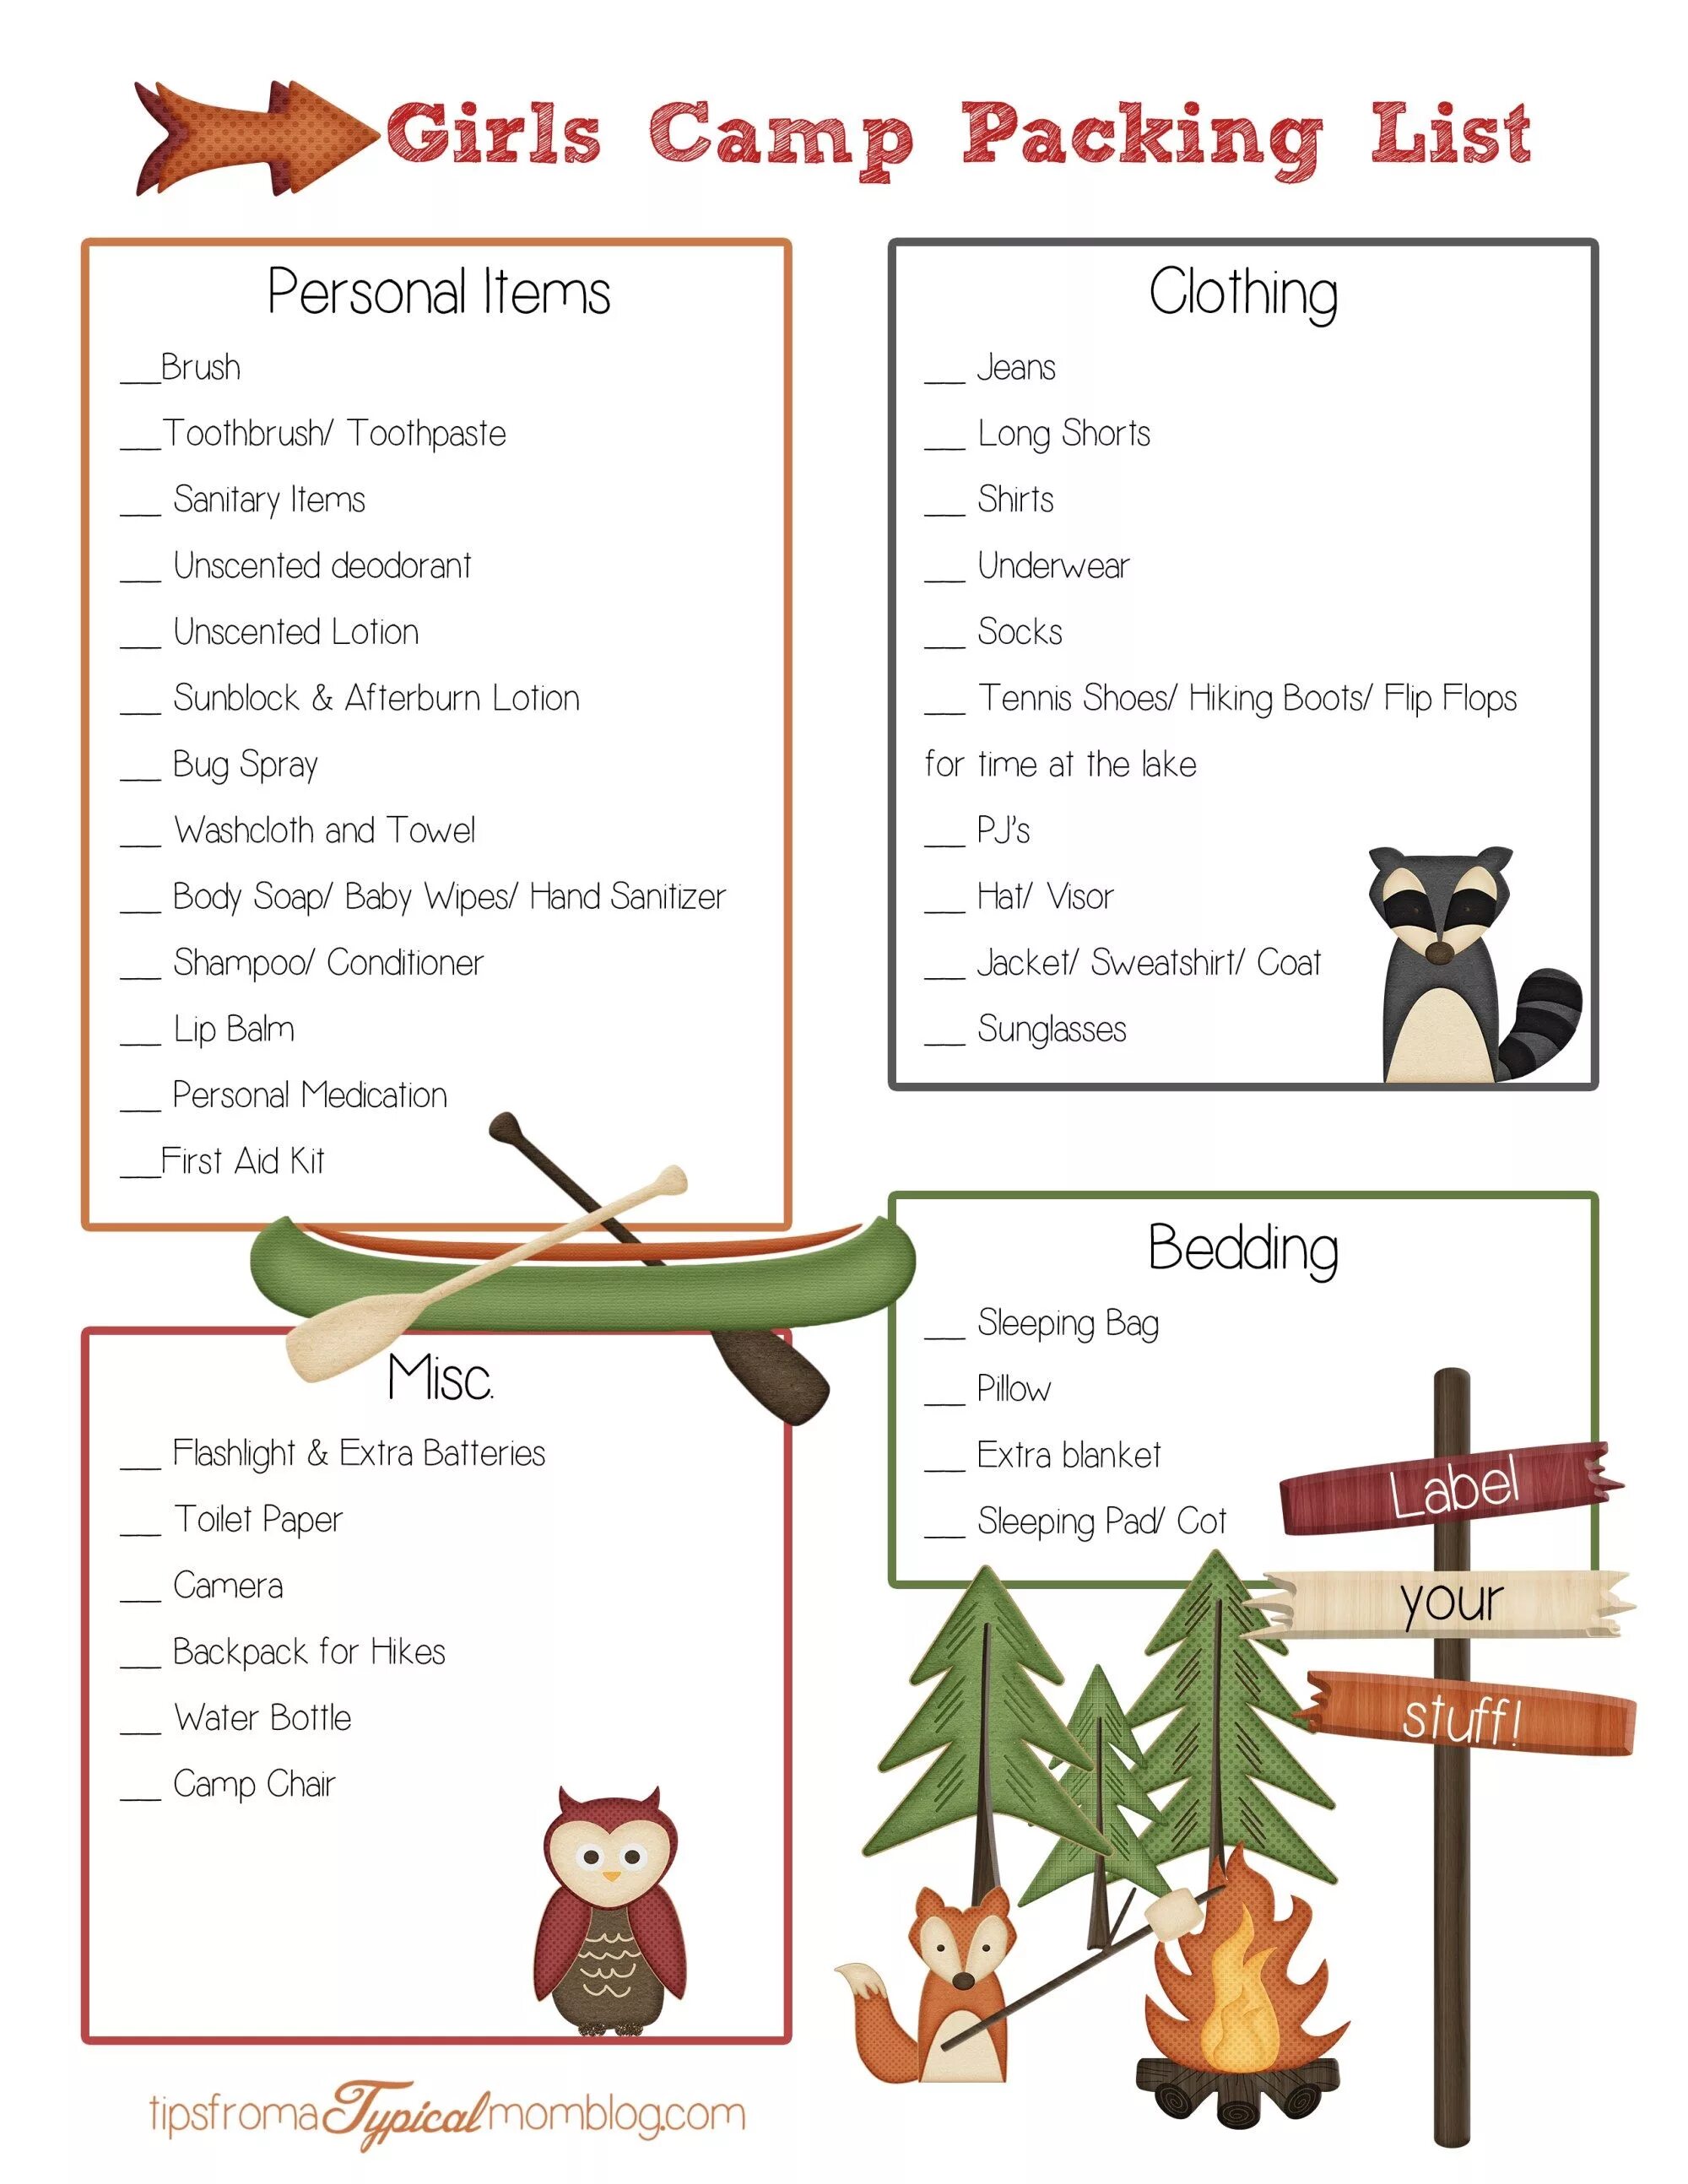 Camp list. Camping list Sample. Camp manual Inspection children.